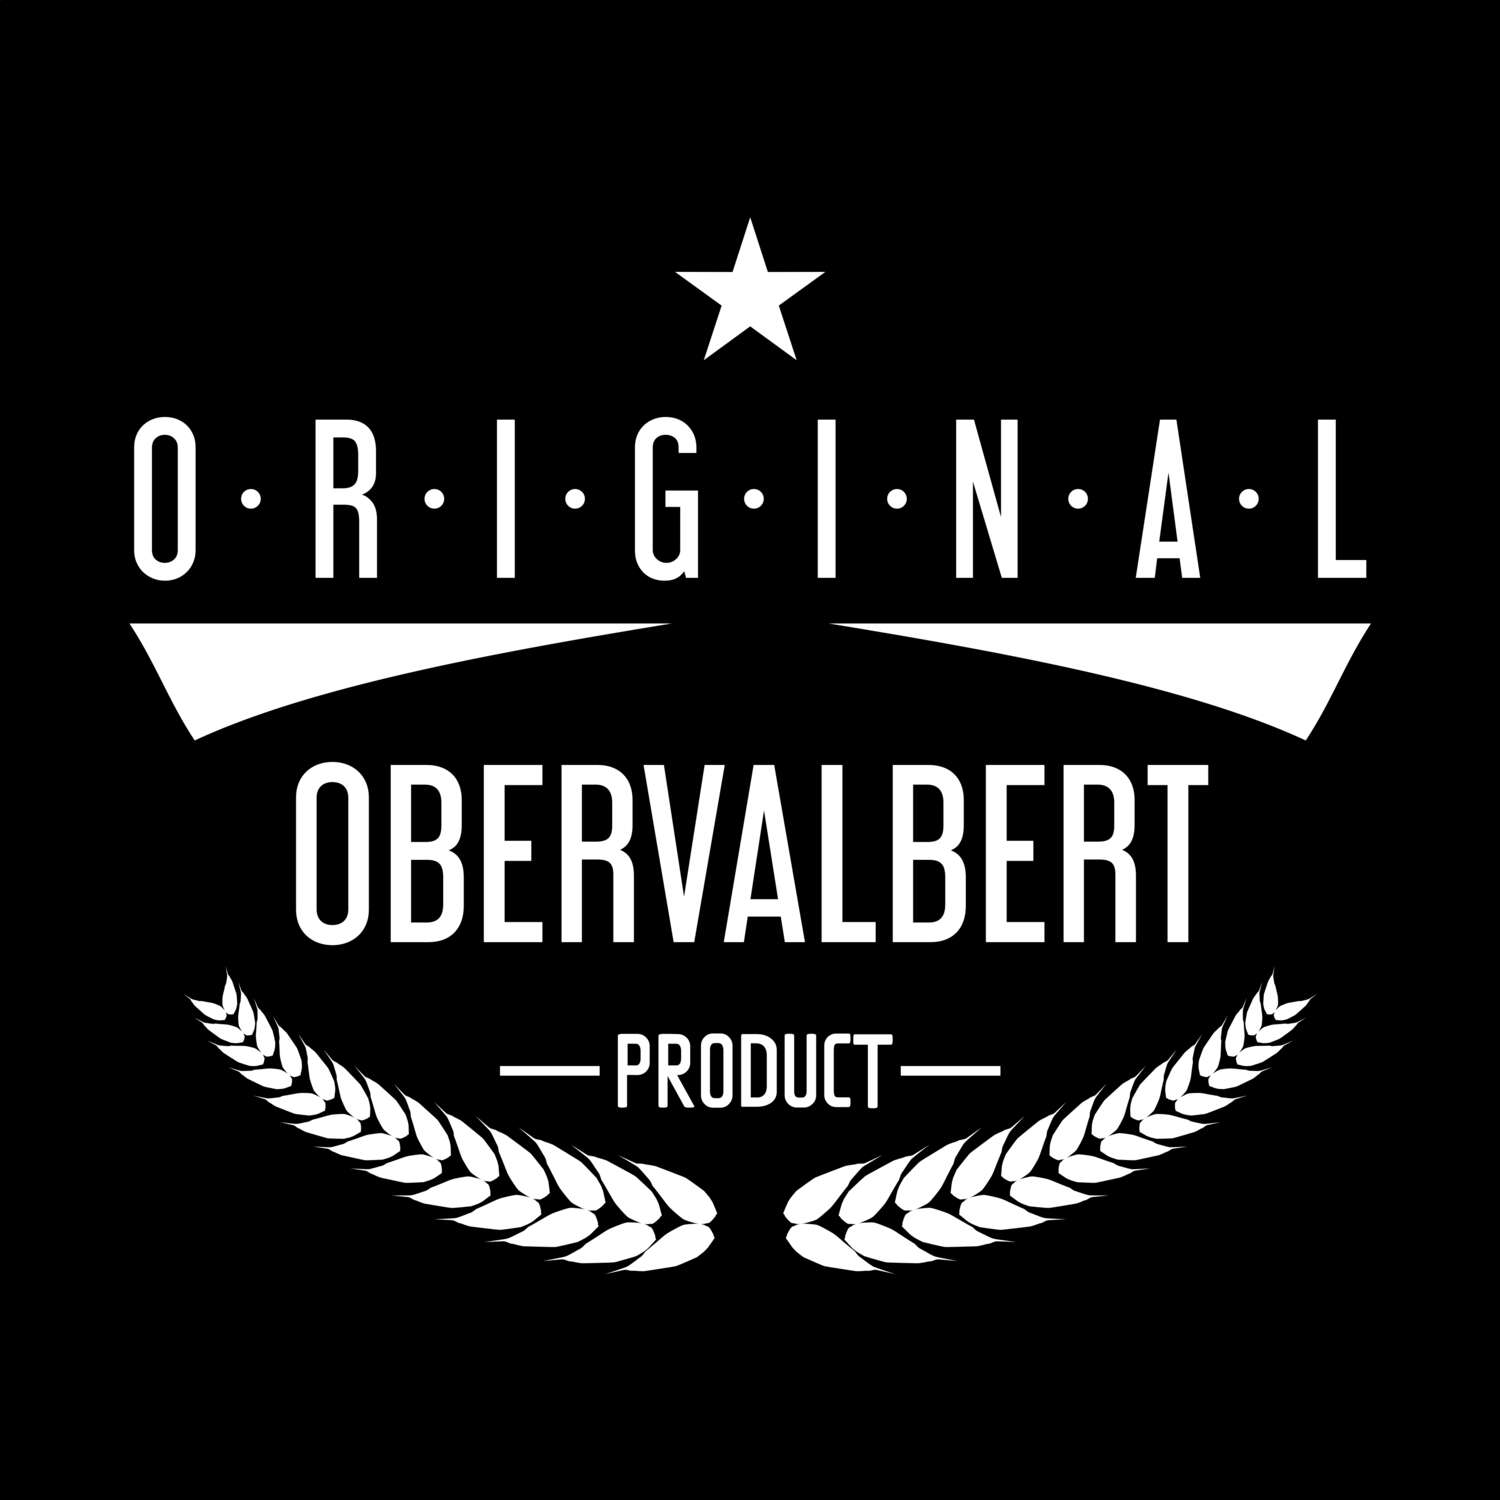 Obervalbert T-Shirt »Original Product«